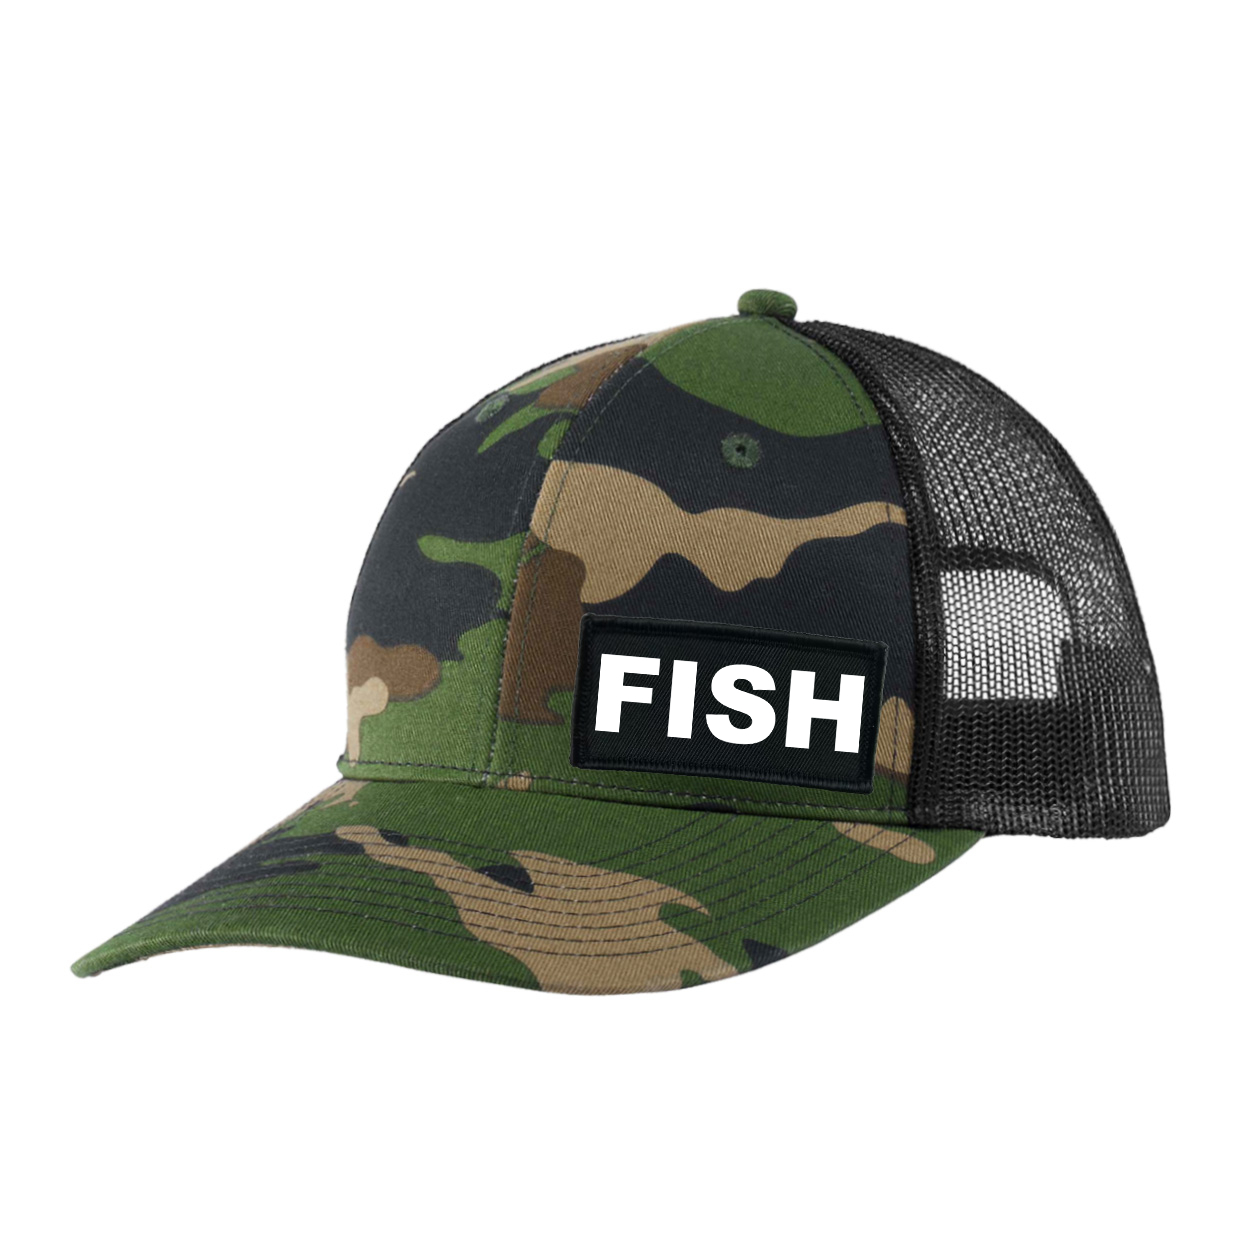 Fish Brand Logo Night Out Woven Patch Snapback Trucker Hat Khaki/Camo (White Logo)